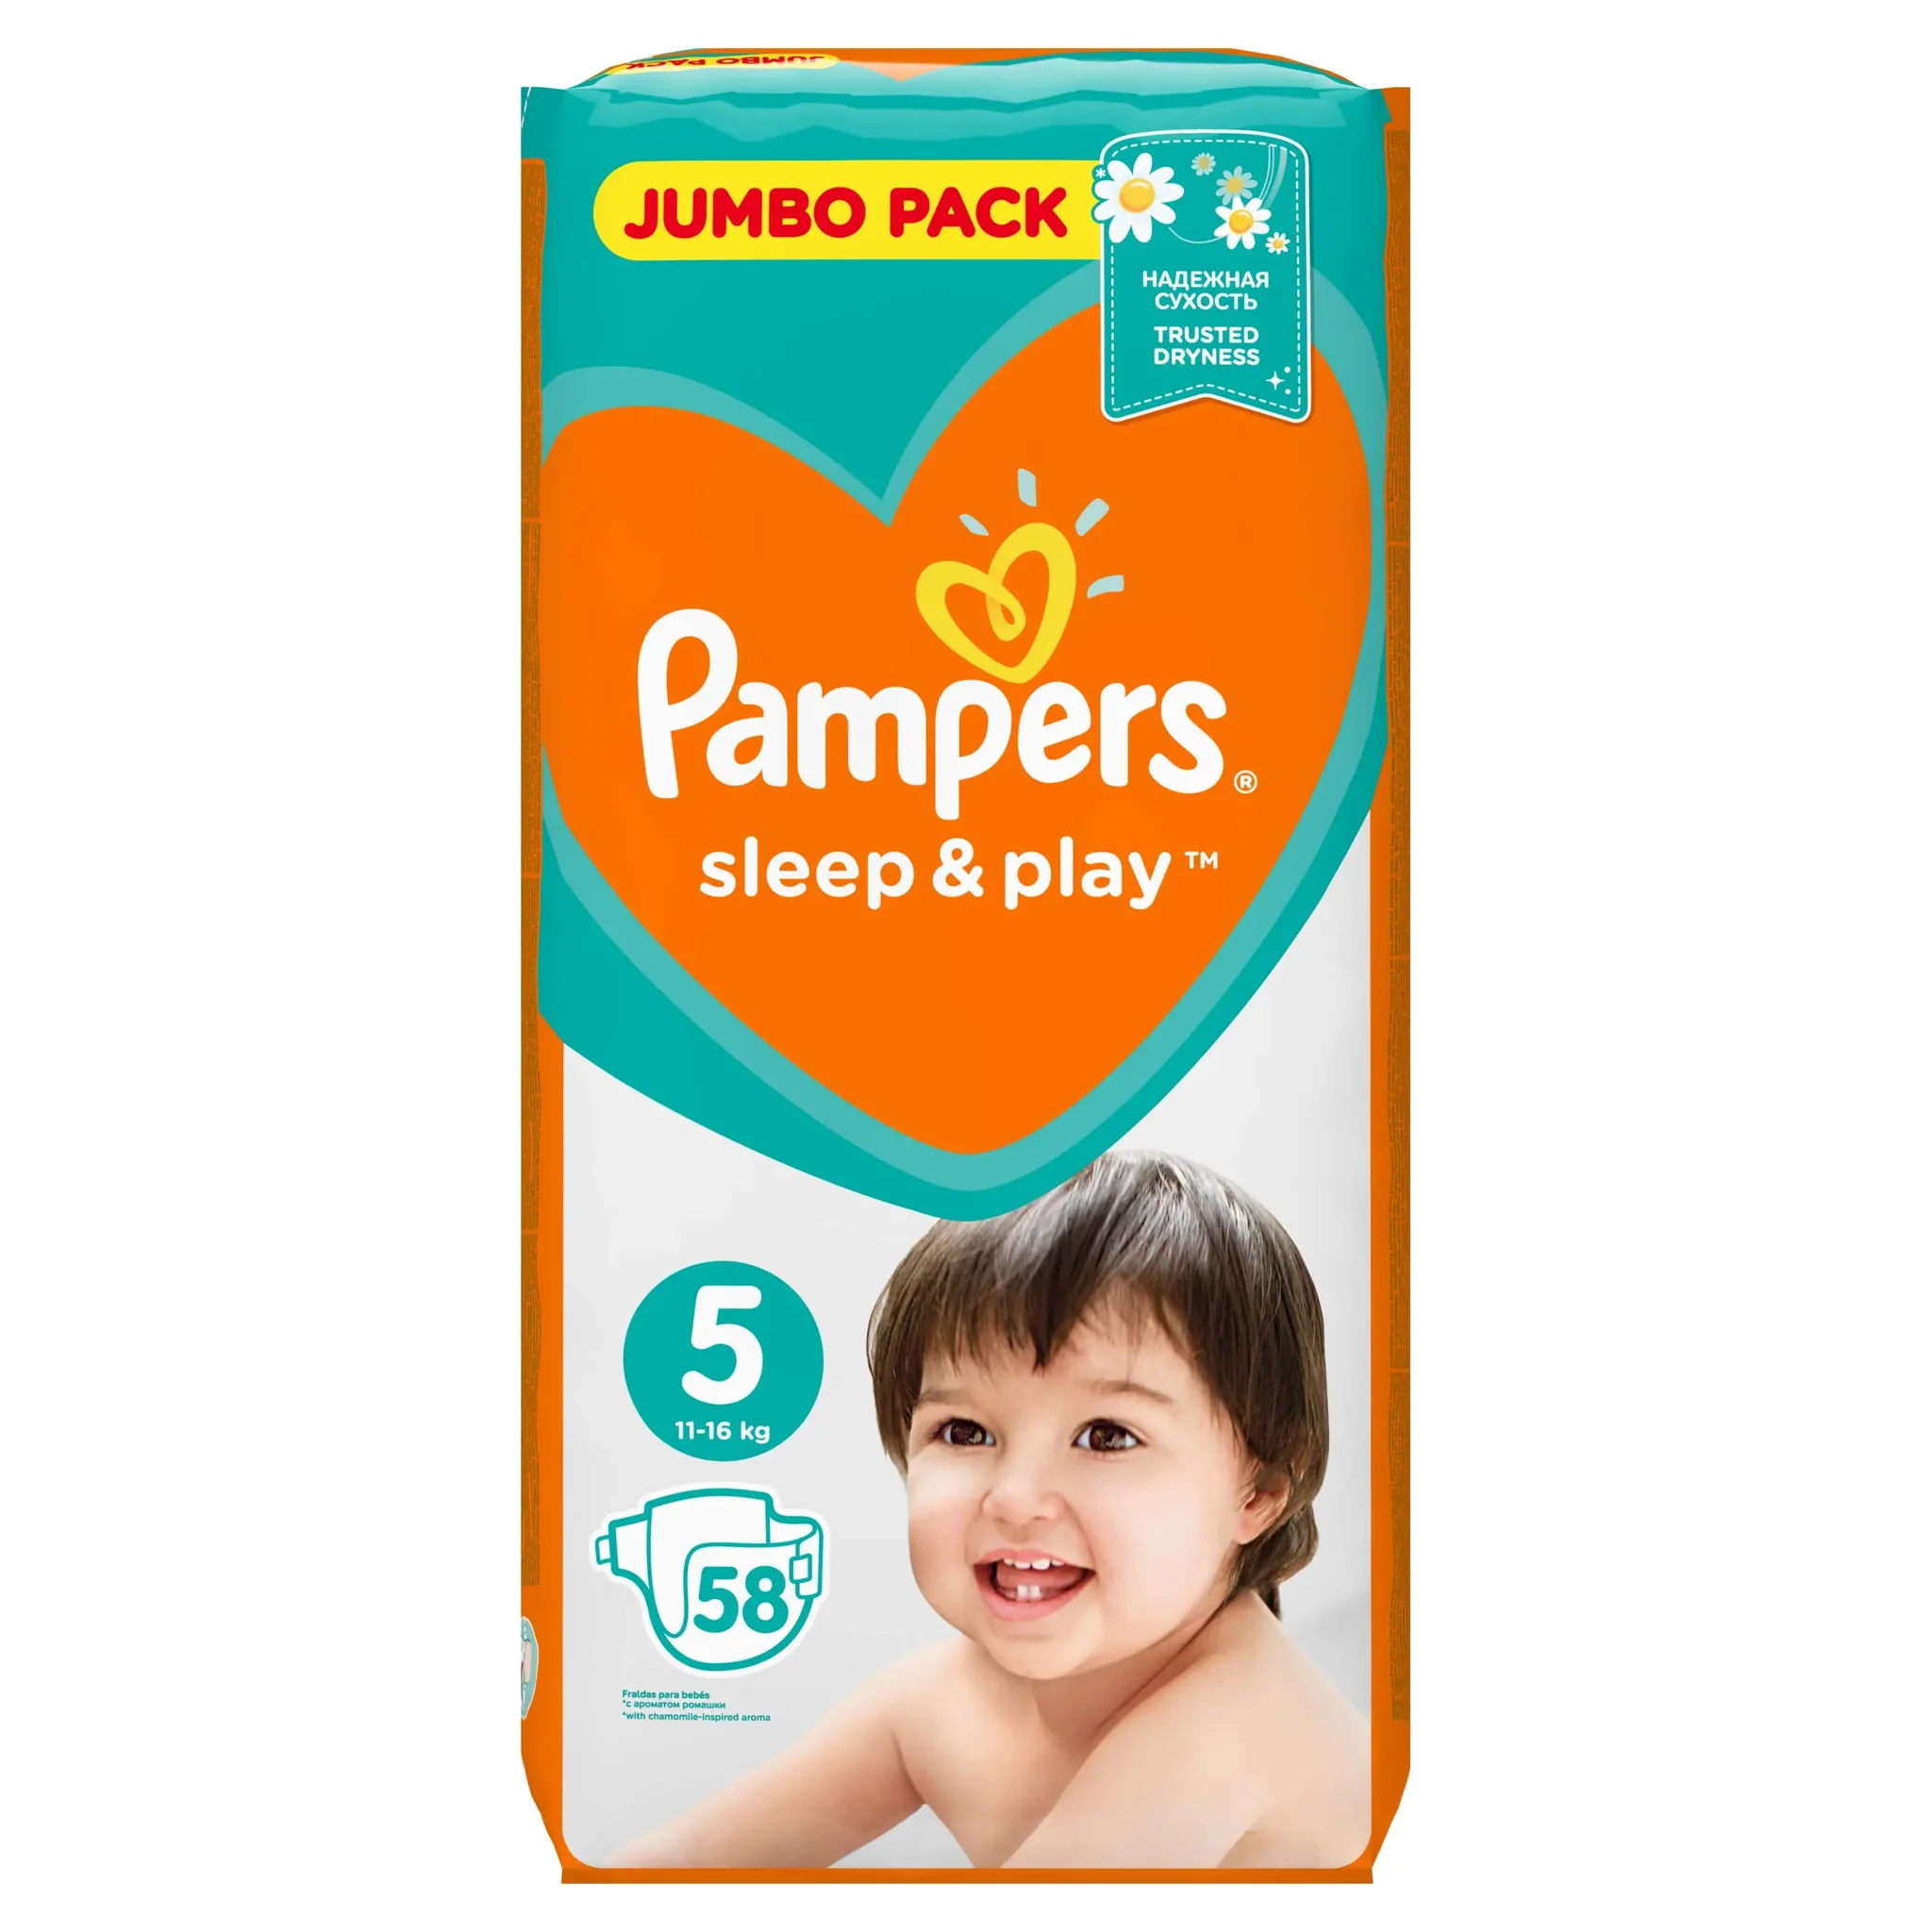 pampers sleep and play jumbo